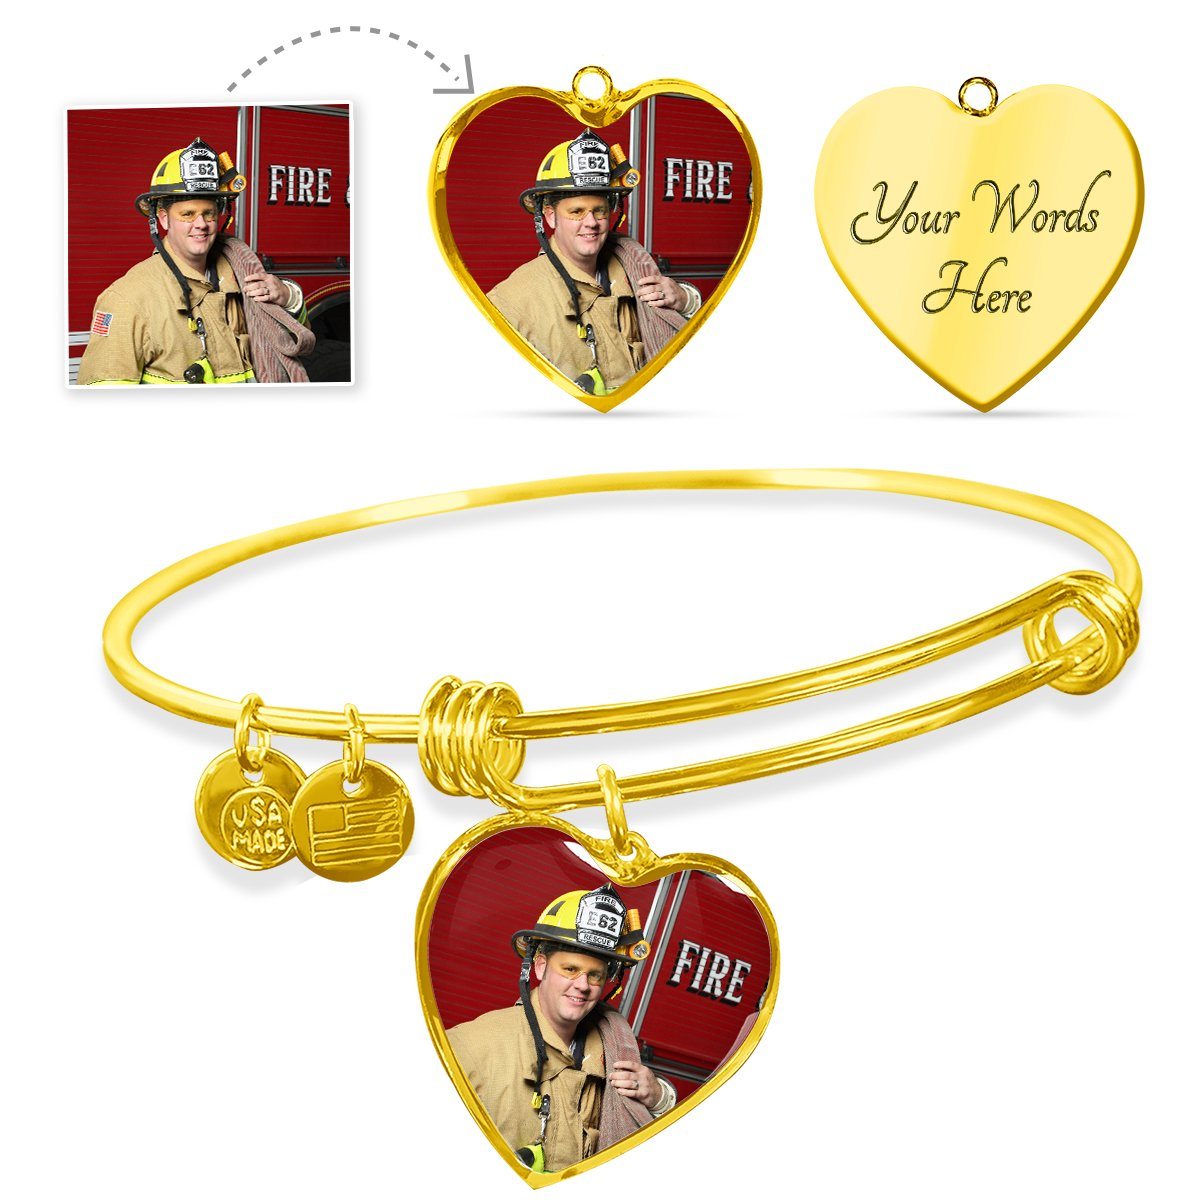 Firefighter Personalized Photo Heart Bangle Bracelet - Heroic Defender